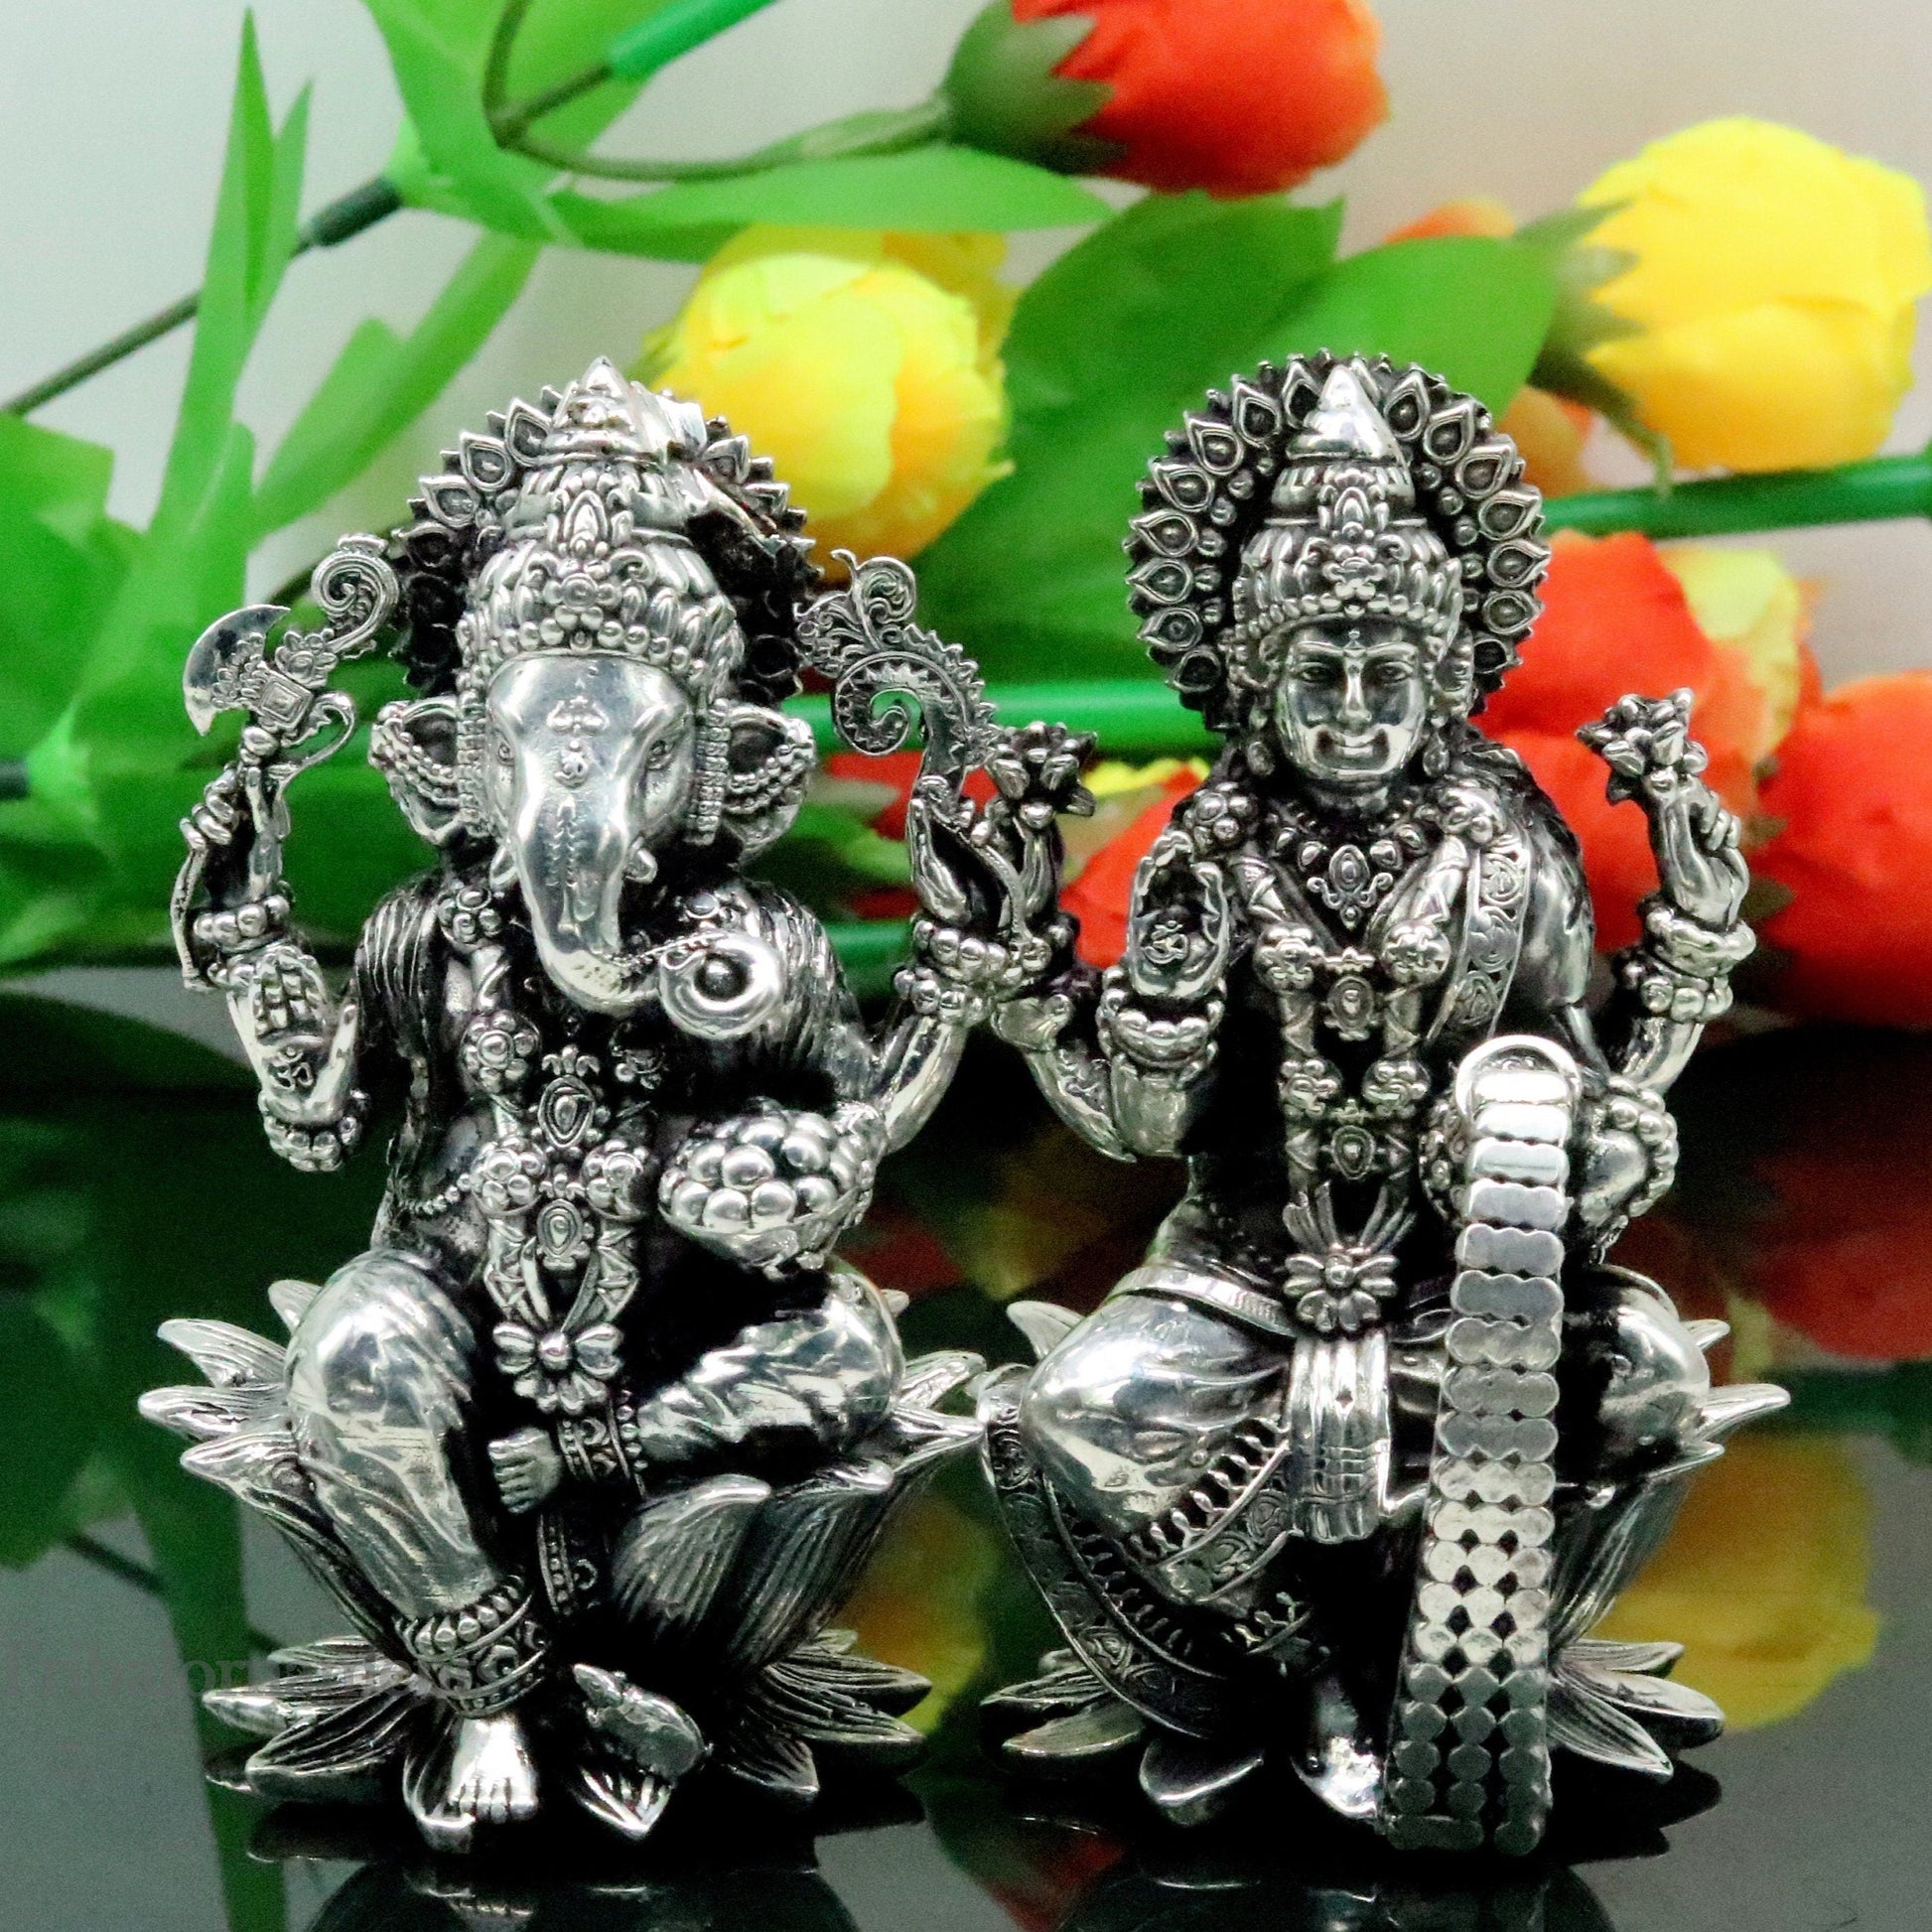 3.3" small 925 Sterling silver handmade customized Hindu idol Laxmi and Ganesha statue, puja article figurine, home décor Diwali puja art379 - TRIBAL ORNAMENTS